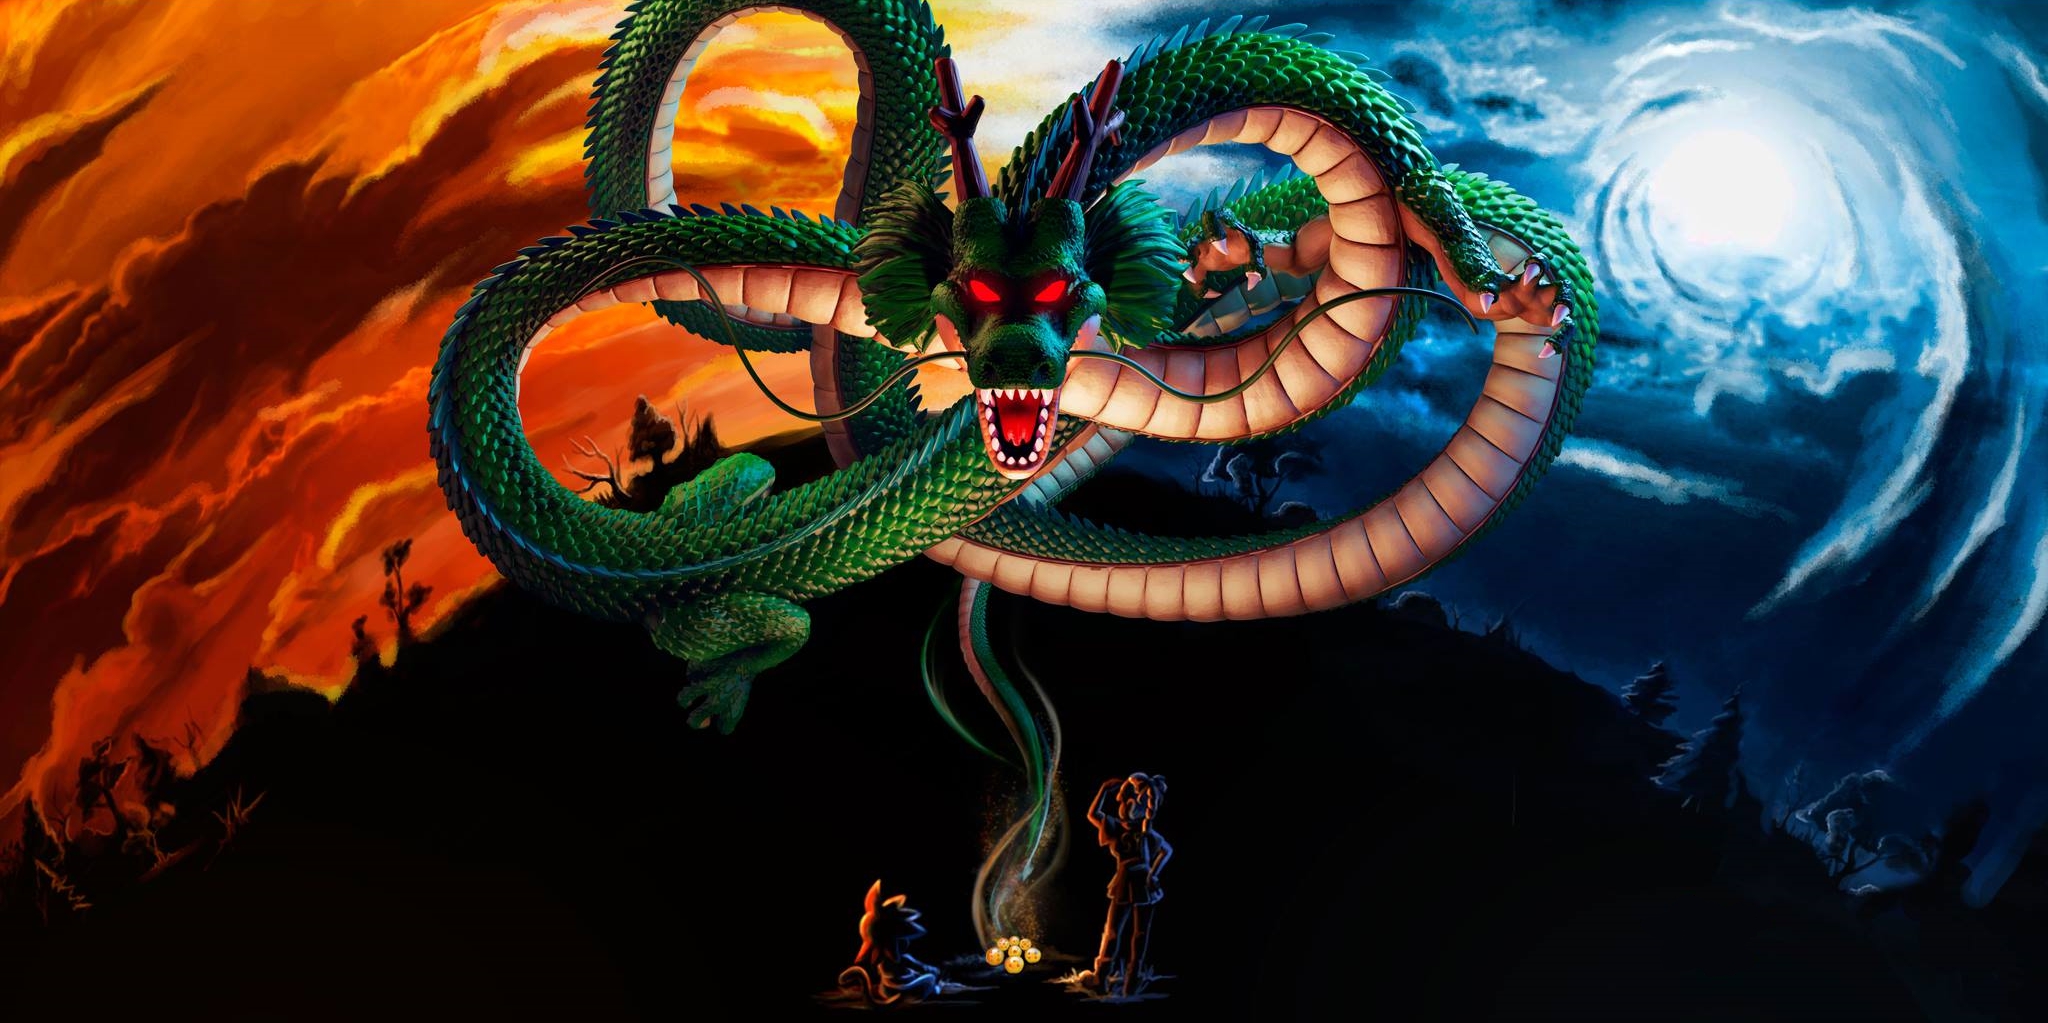 dragon ball super fond d'écran,serpent,dragon,personnage fictif,illustration,oeuvre de cg